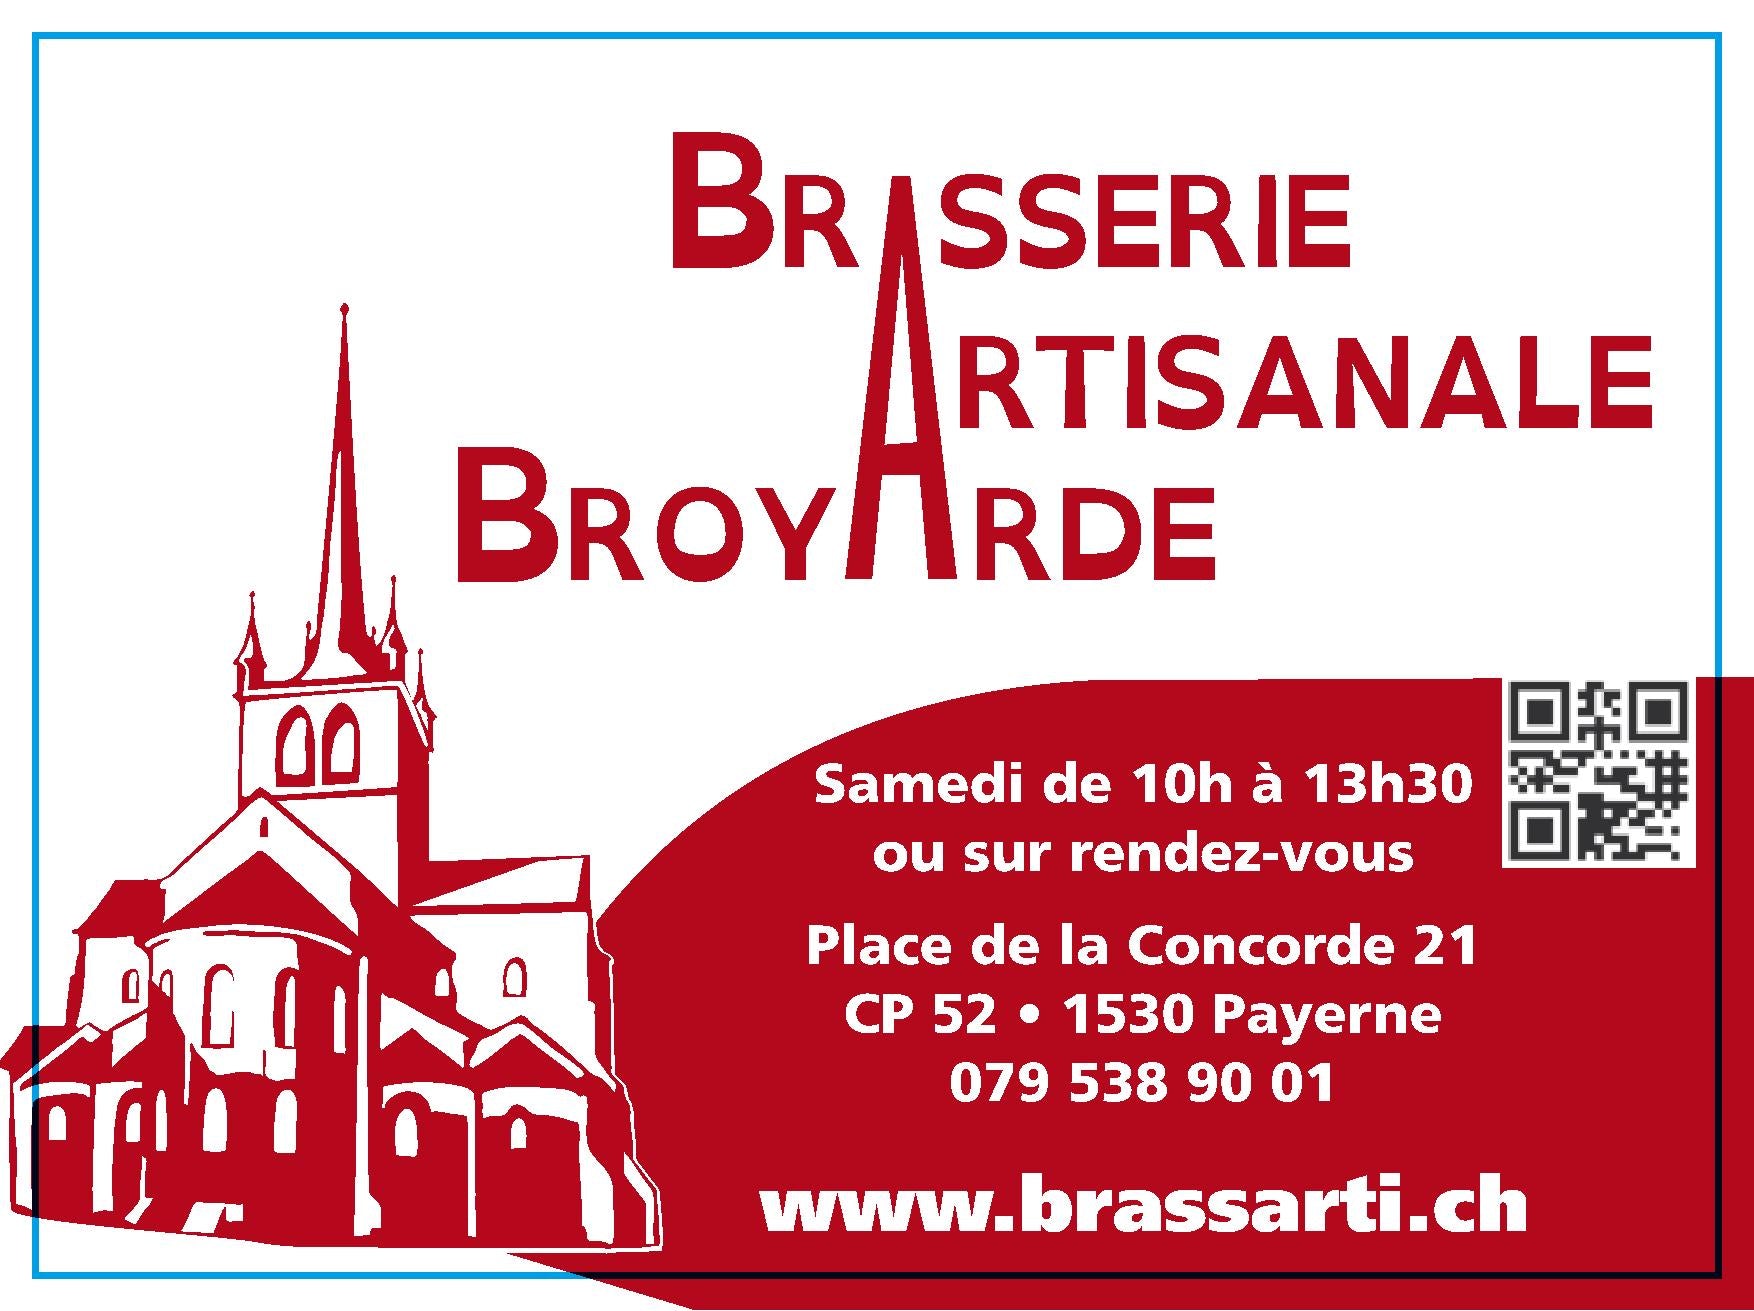 Brasserie Artisanale Broyarde